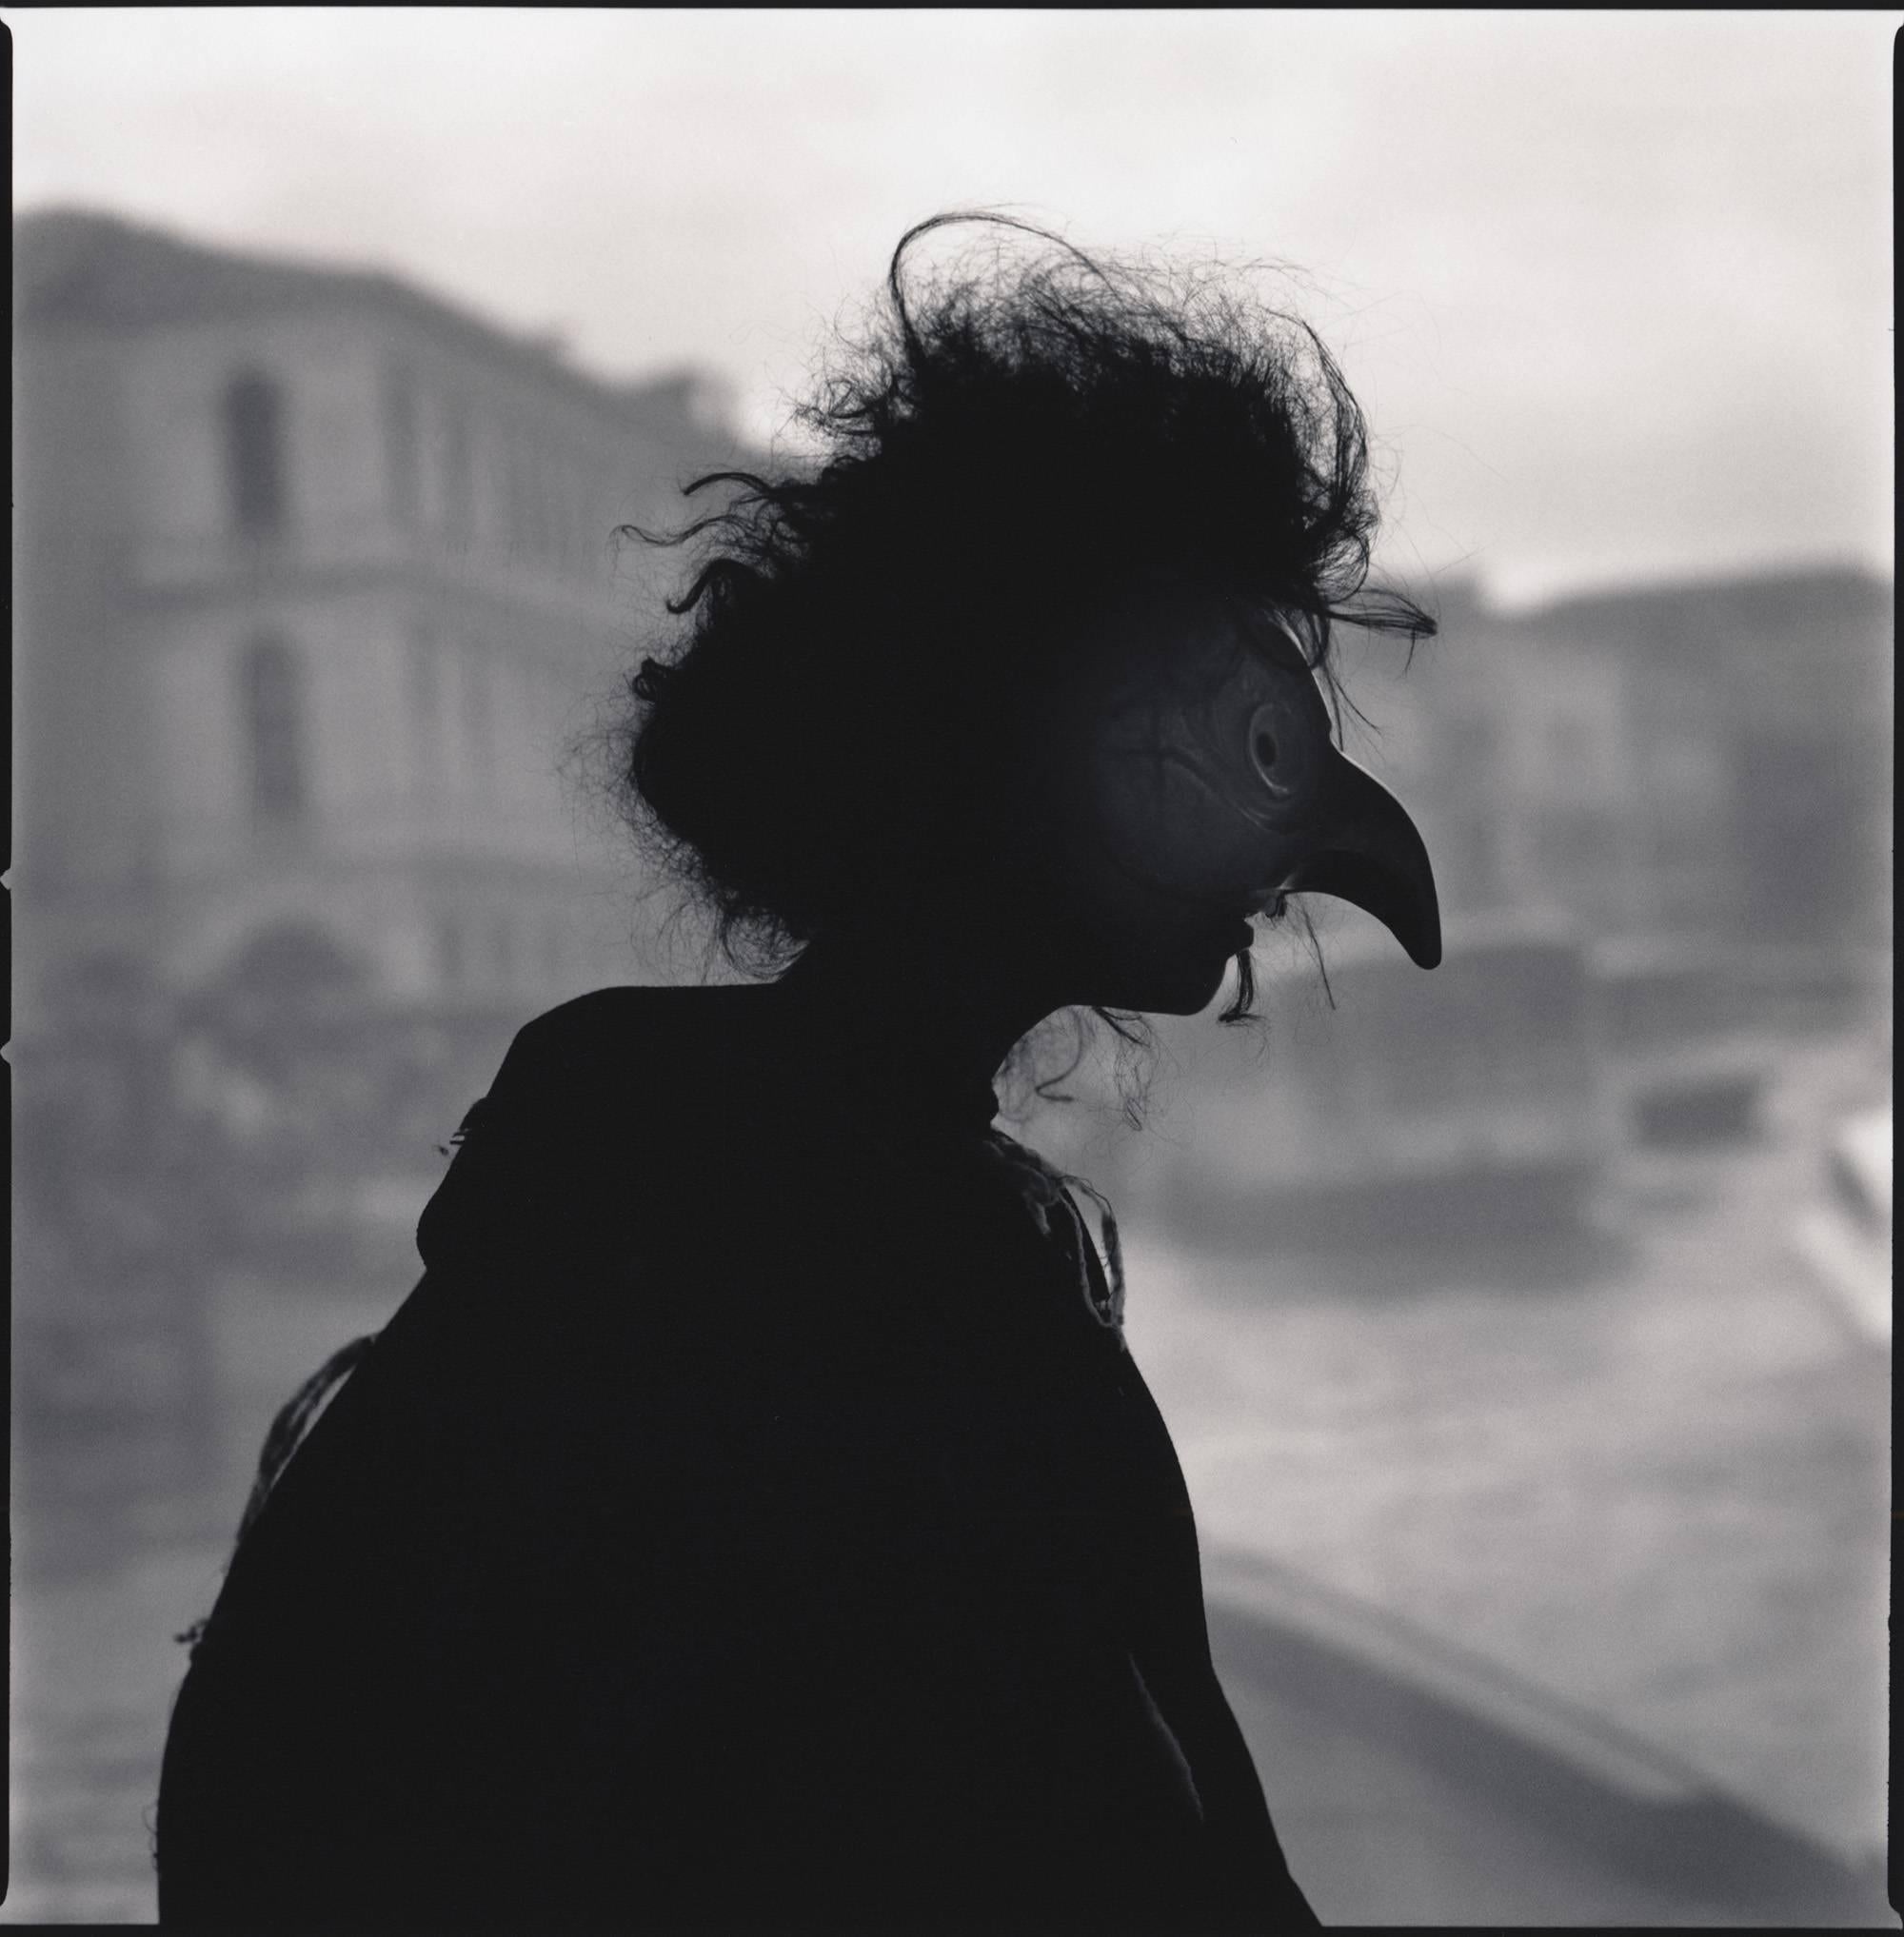 Hiroshi Watanabe Portrait Photograph - Marta Marchi as Strega (Silhouette)